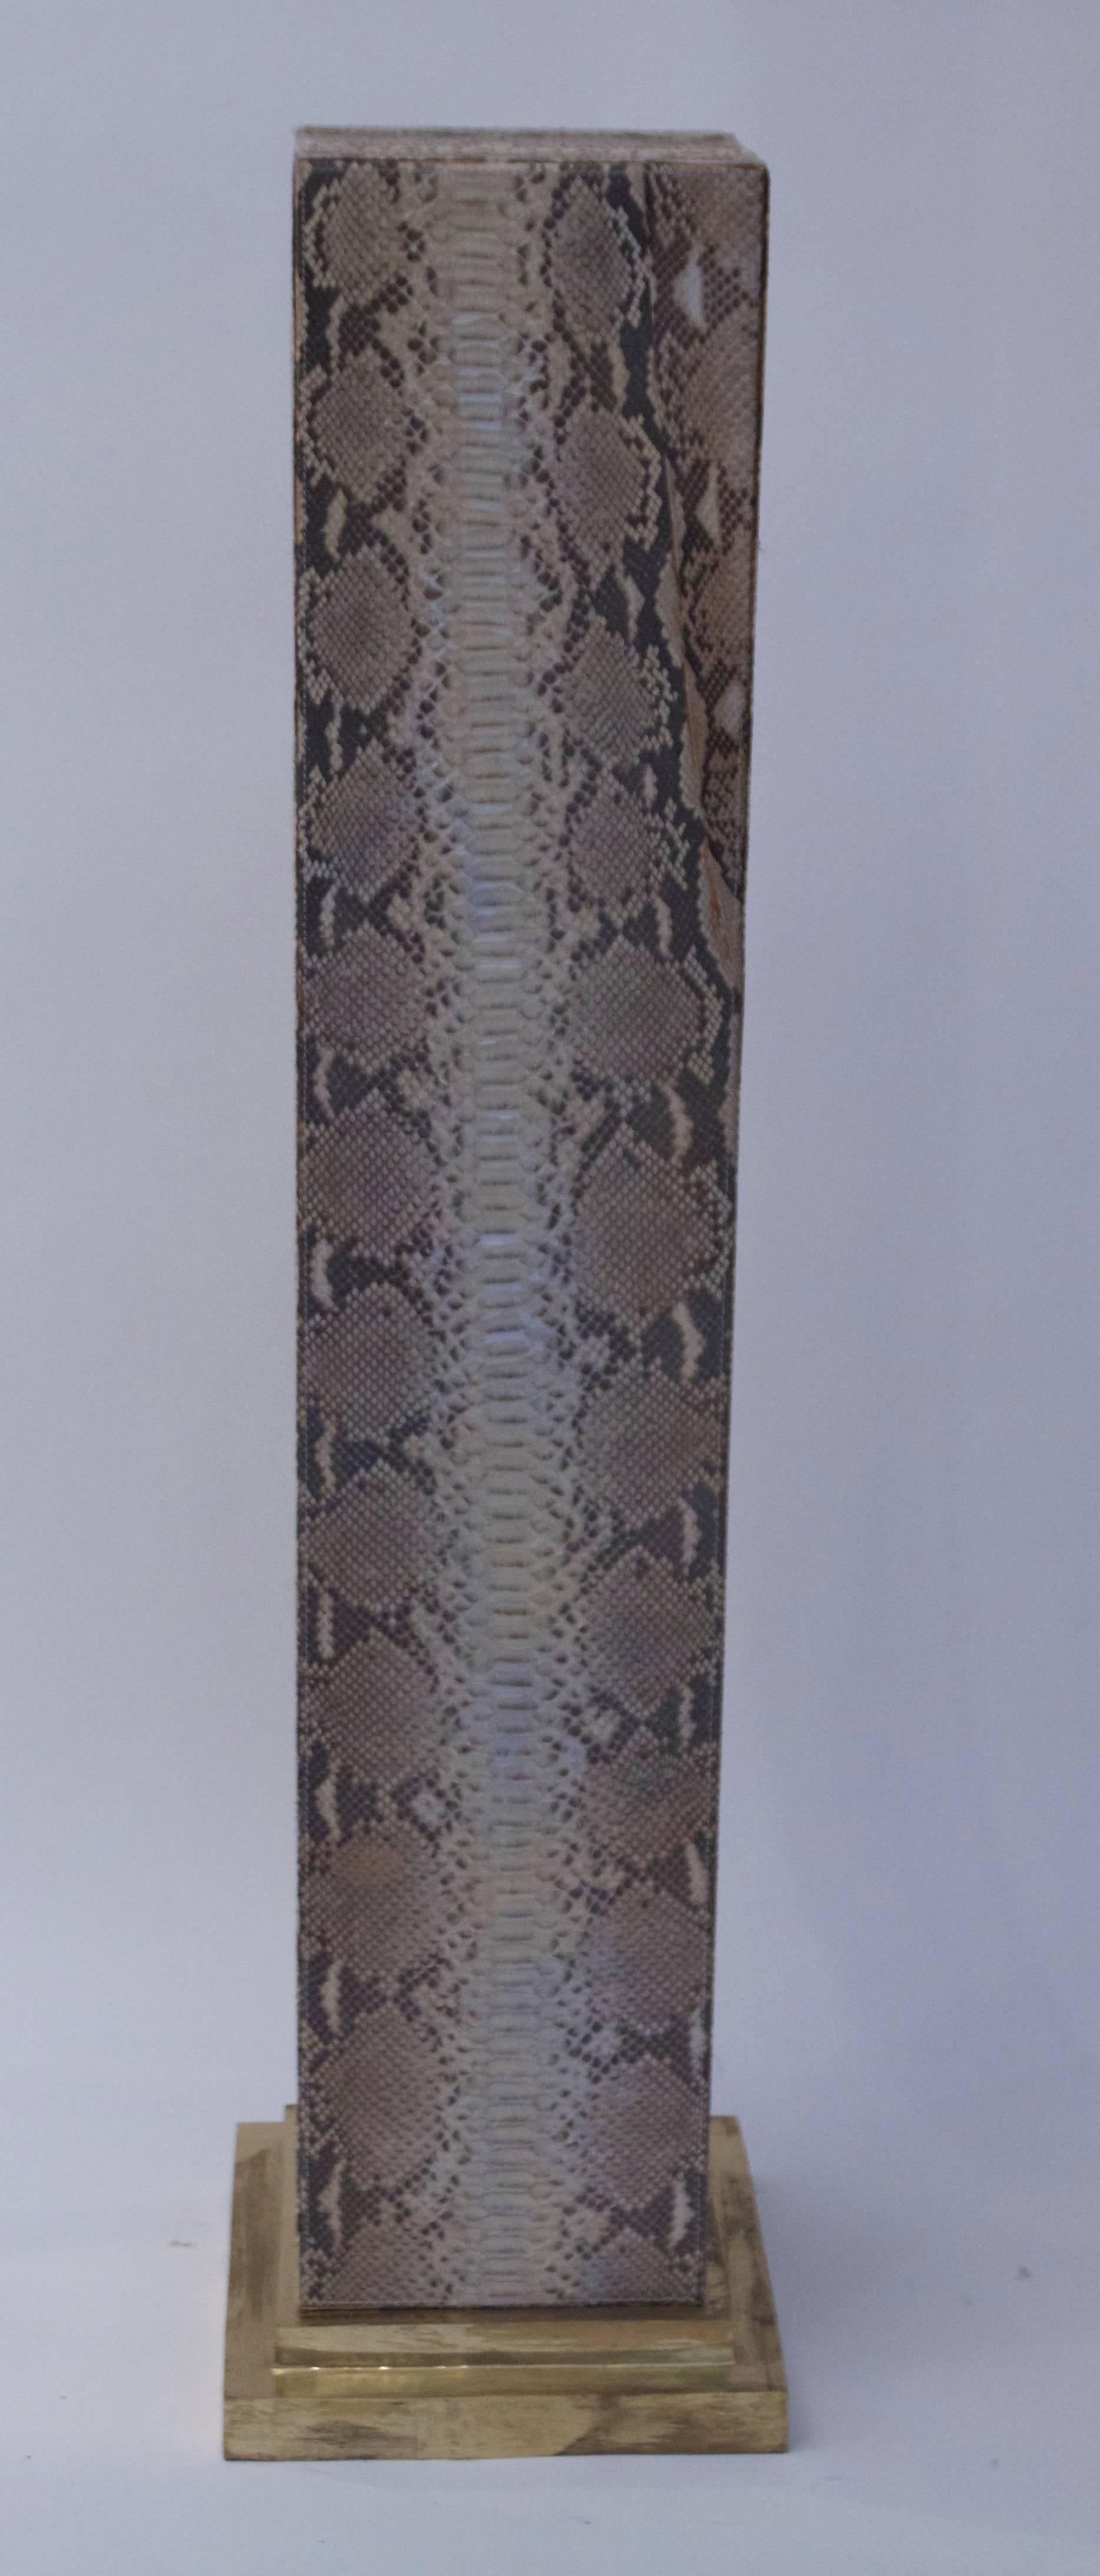 Column, snake, 
gilt brass base,
circa 1970, France.
Measure: Height 1m29, base 32 cm x 32 cm.